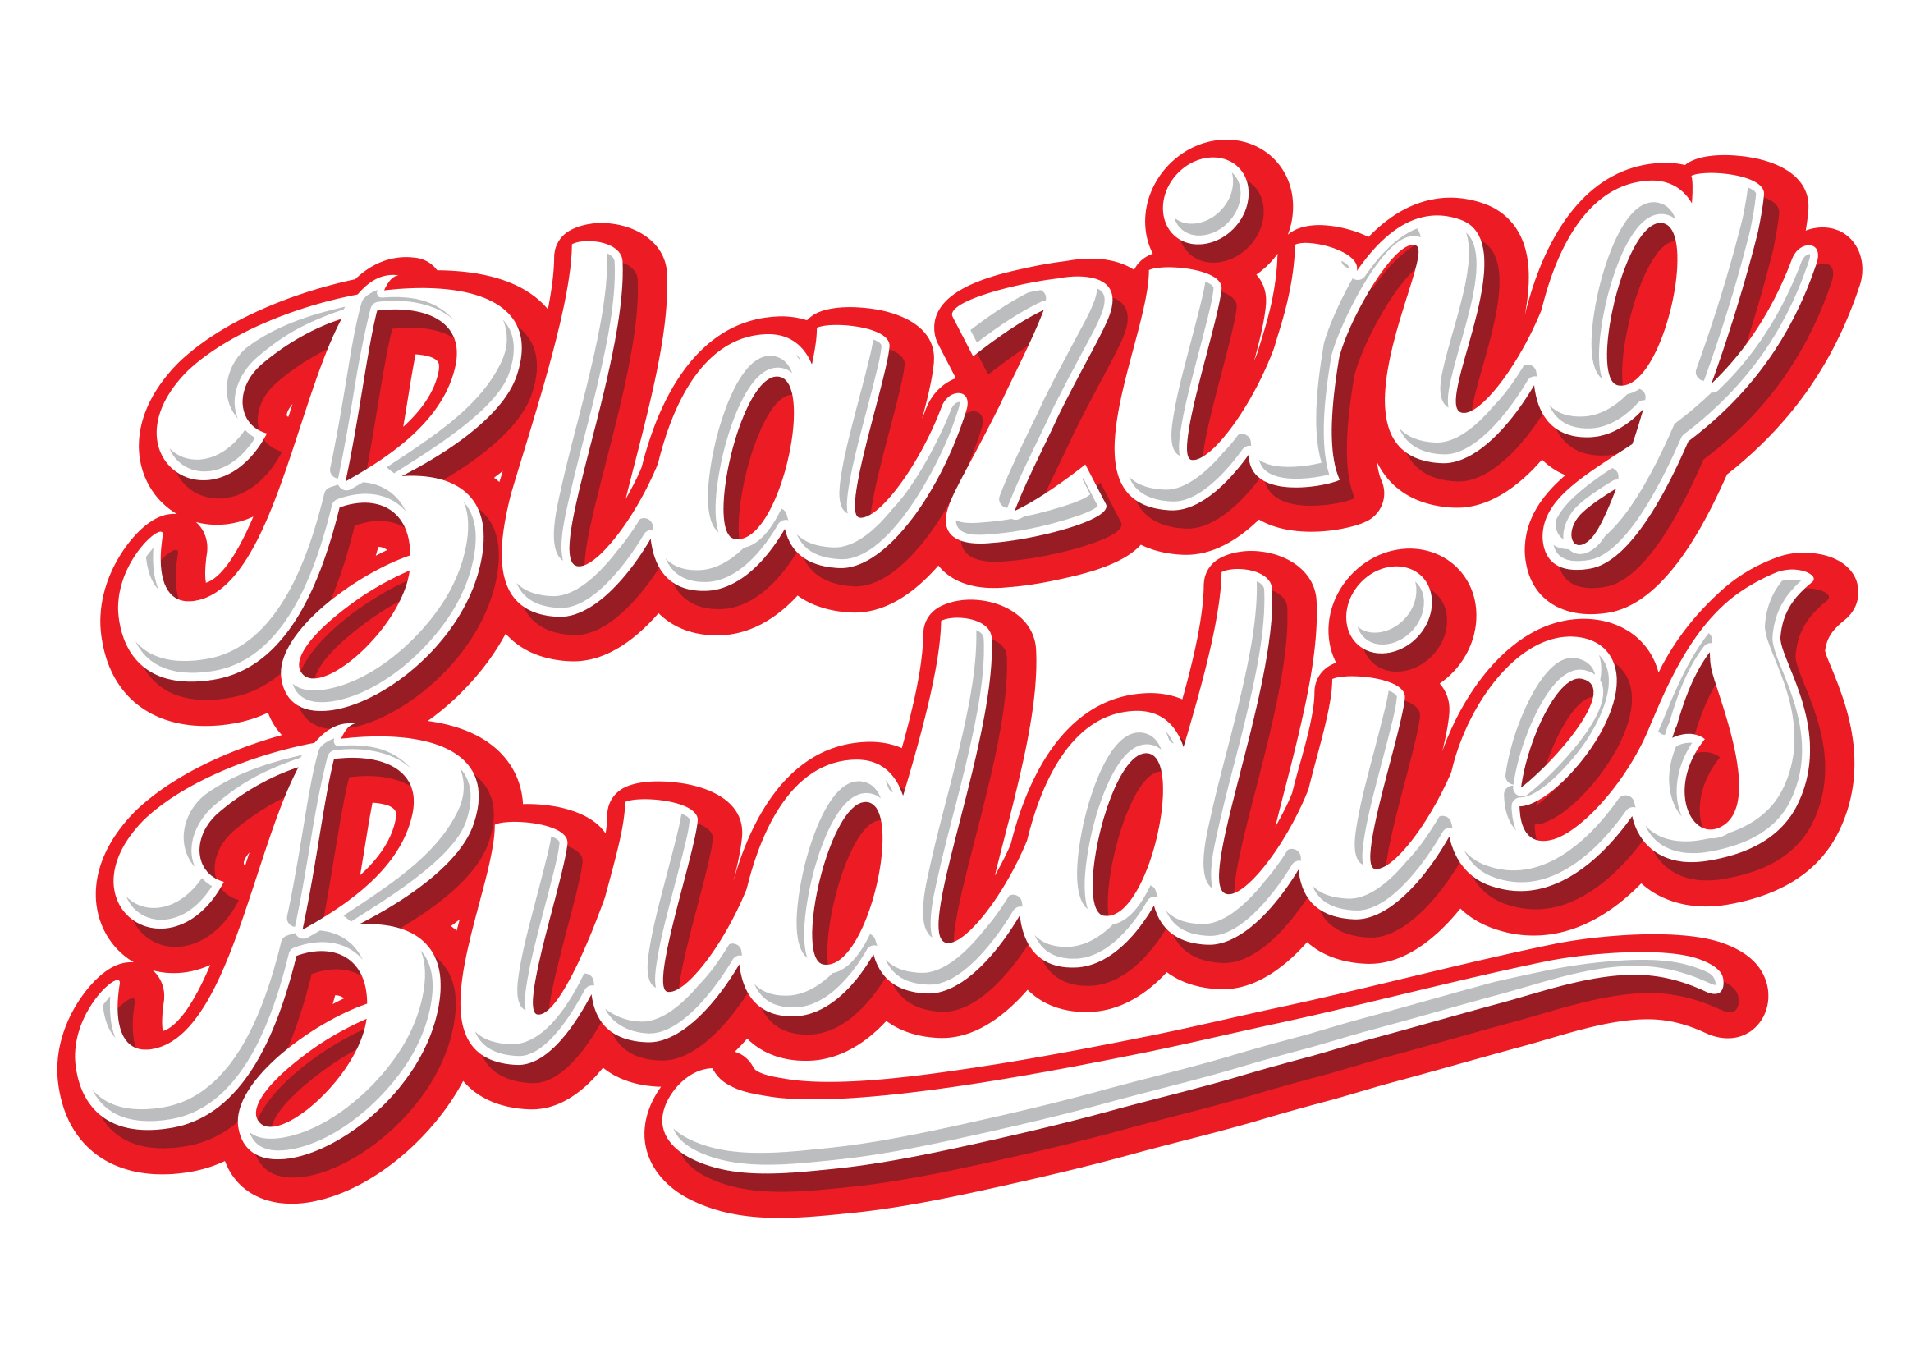 Blazing Buddies